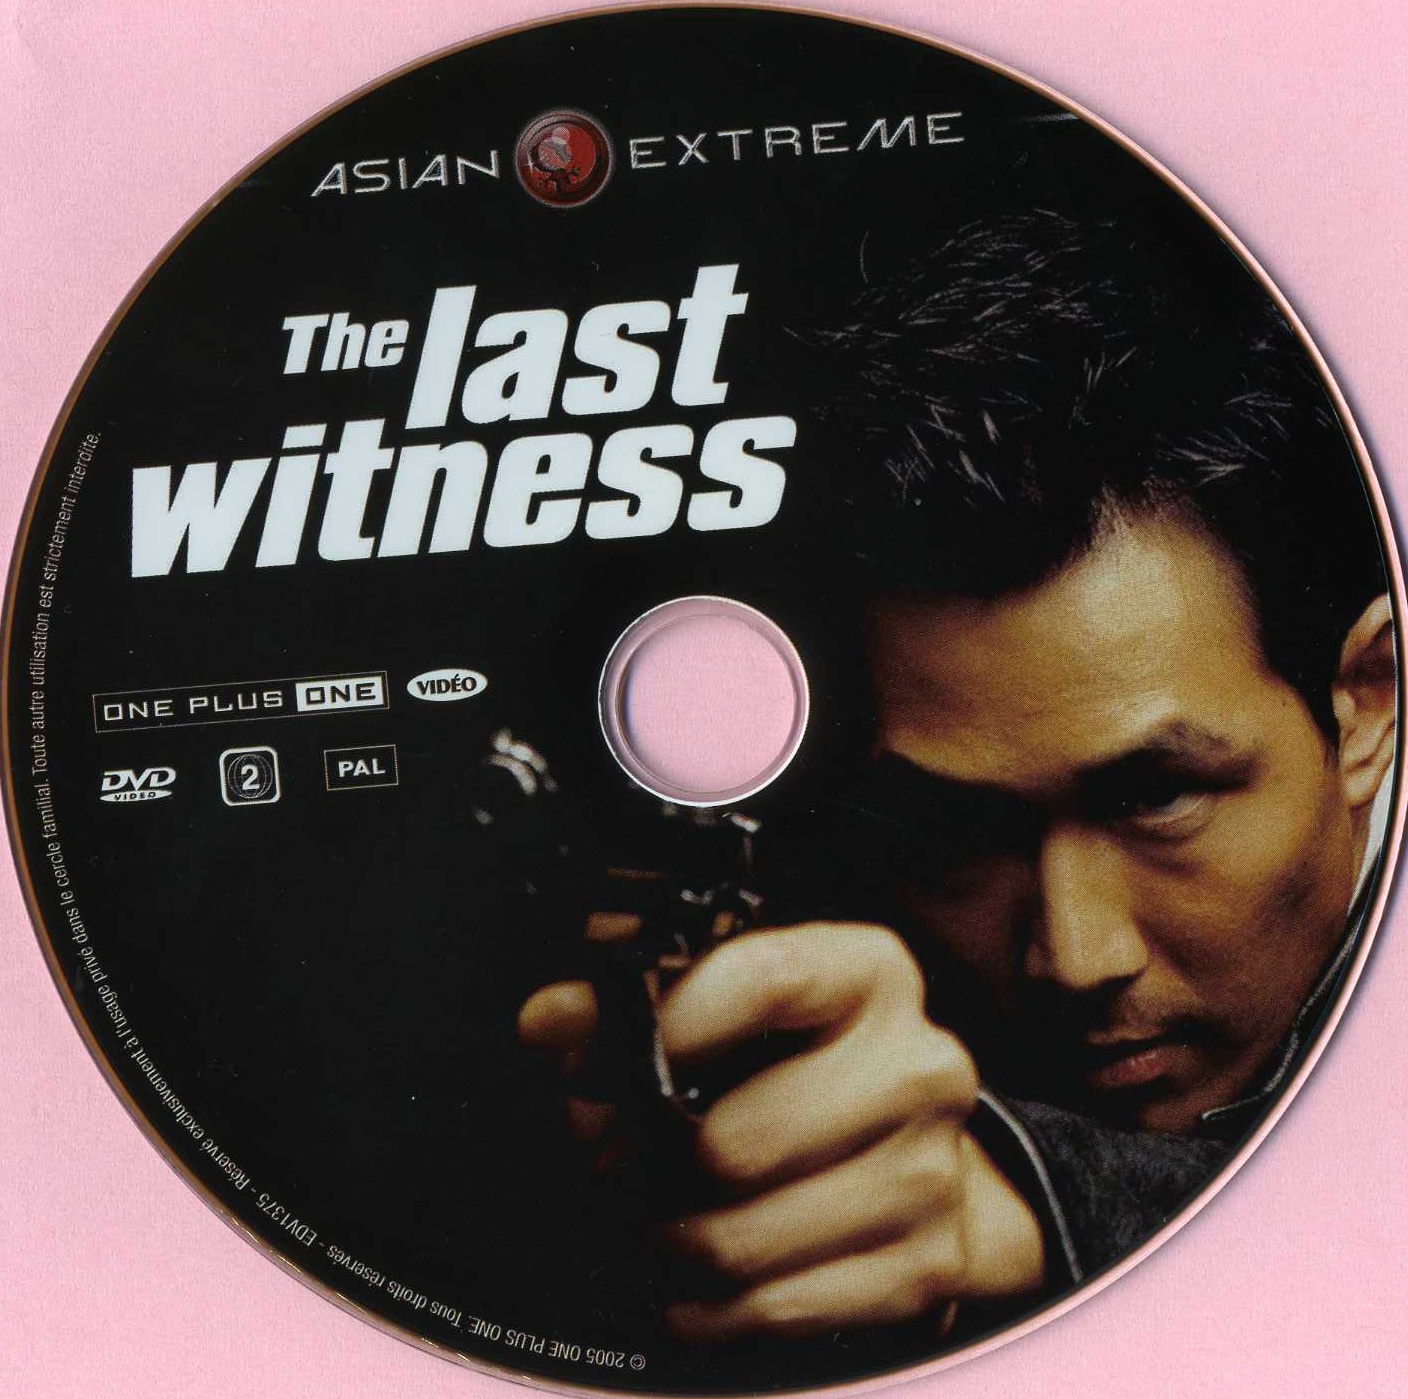 The last witness